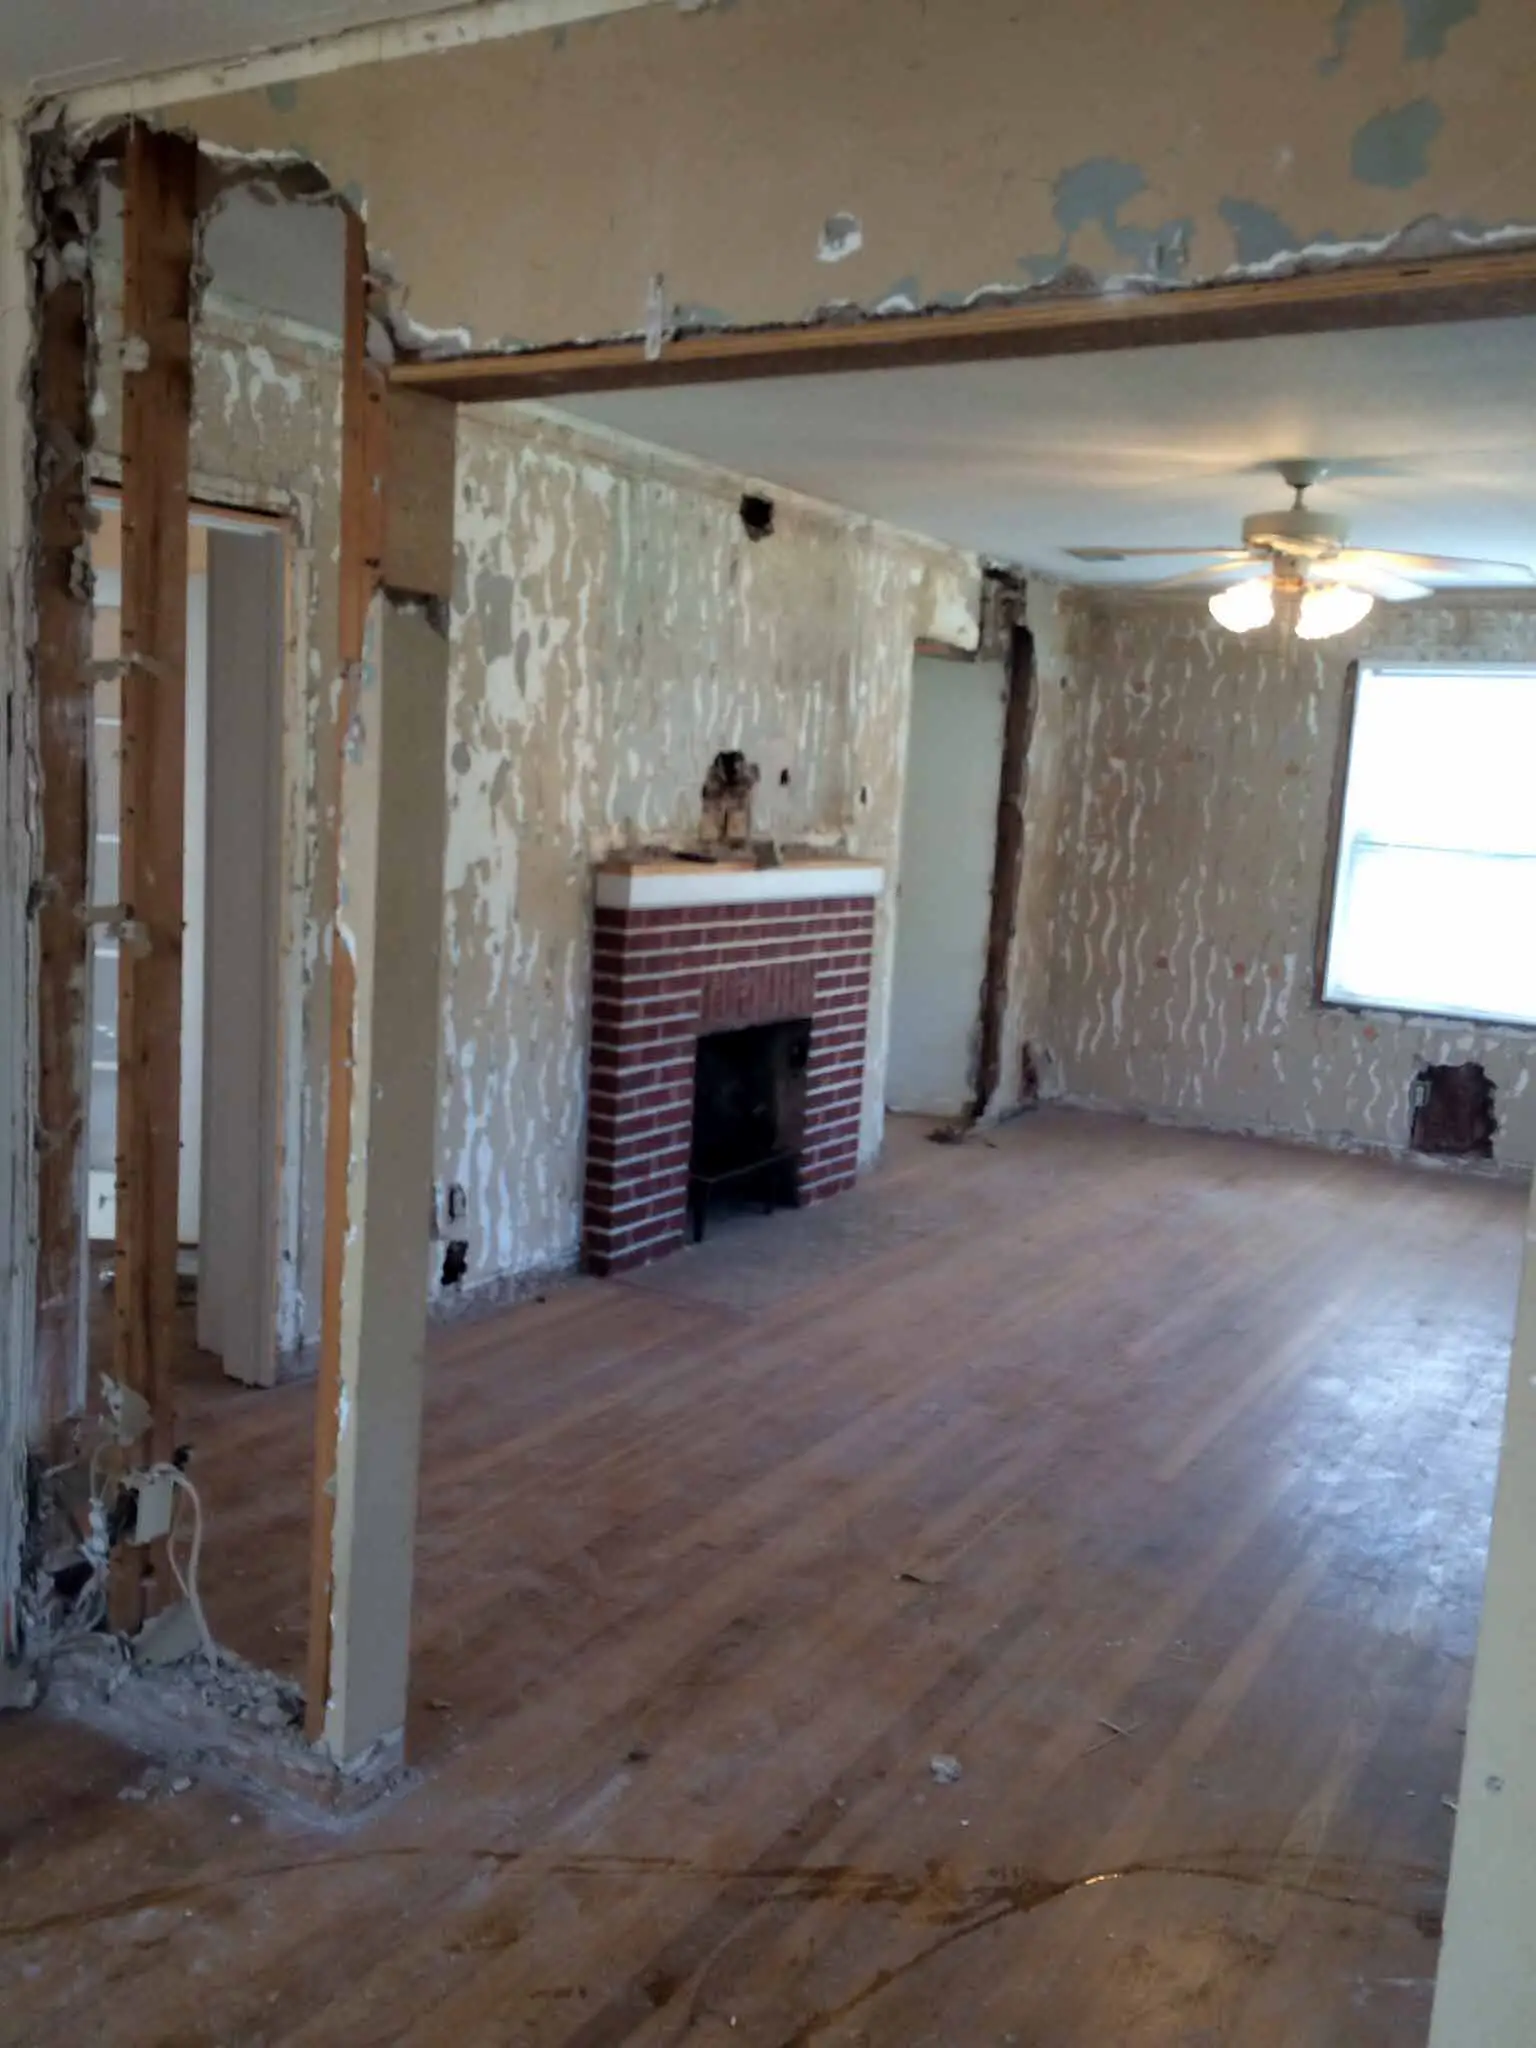 Living Room Renovation In Progress - That Homebird Life